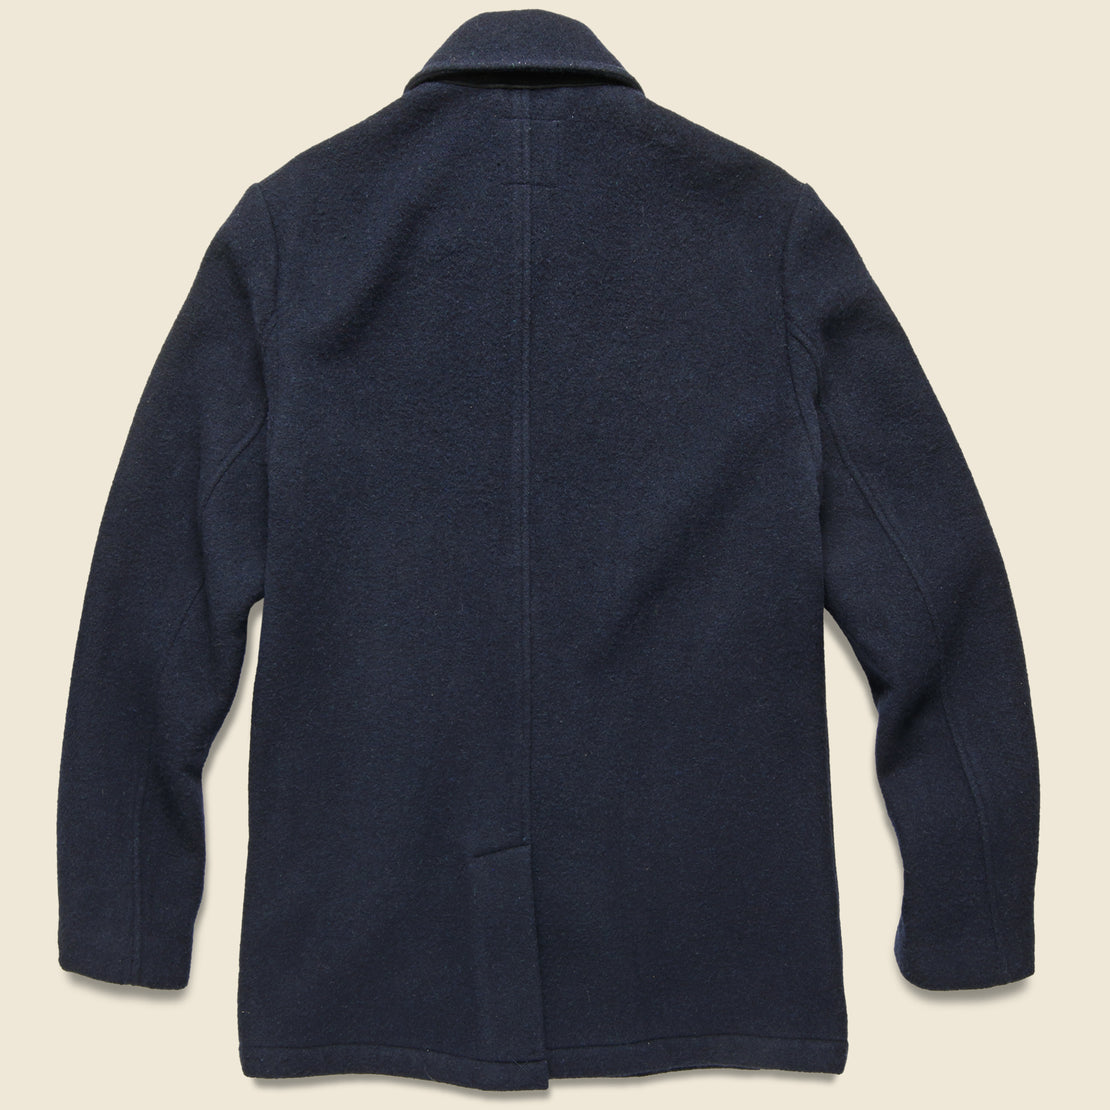 Glastonbury Japanese Wool Coat - Royal Navy - Life After Denim - STAG Provisions - Outerwear - Coat / Jacket